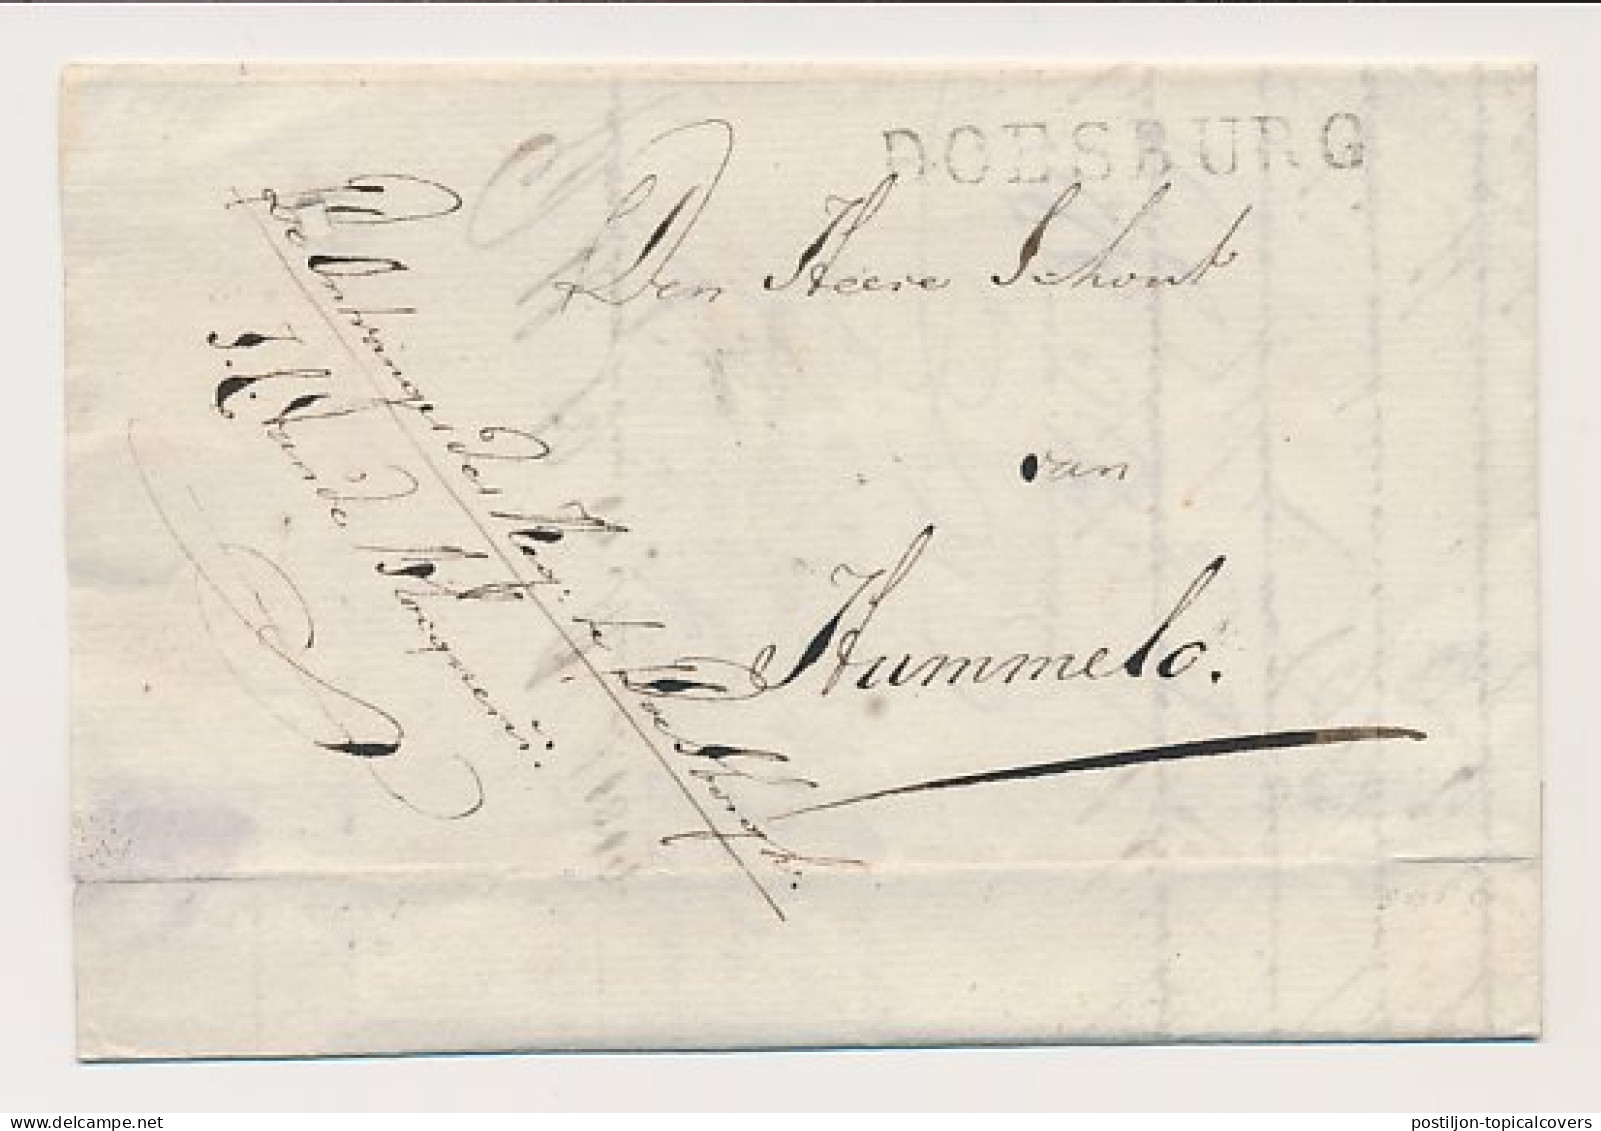 DOESBURG - Hummelo 1819 - ...-1852 Prephilately